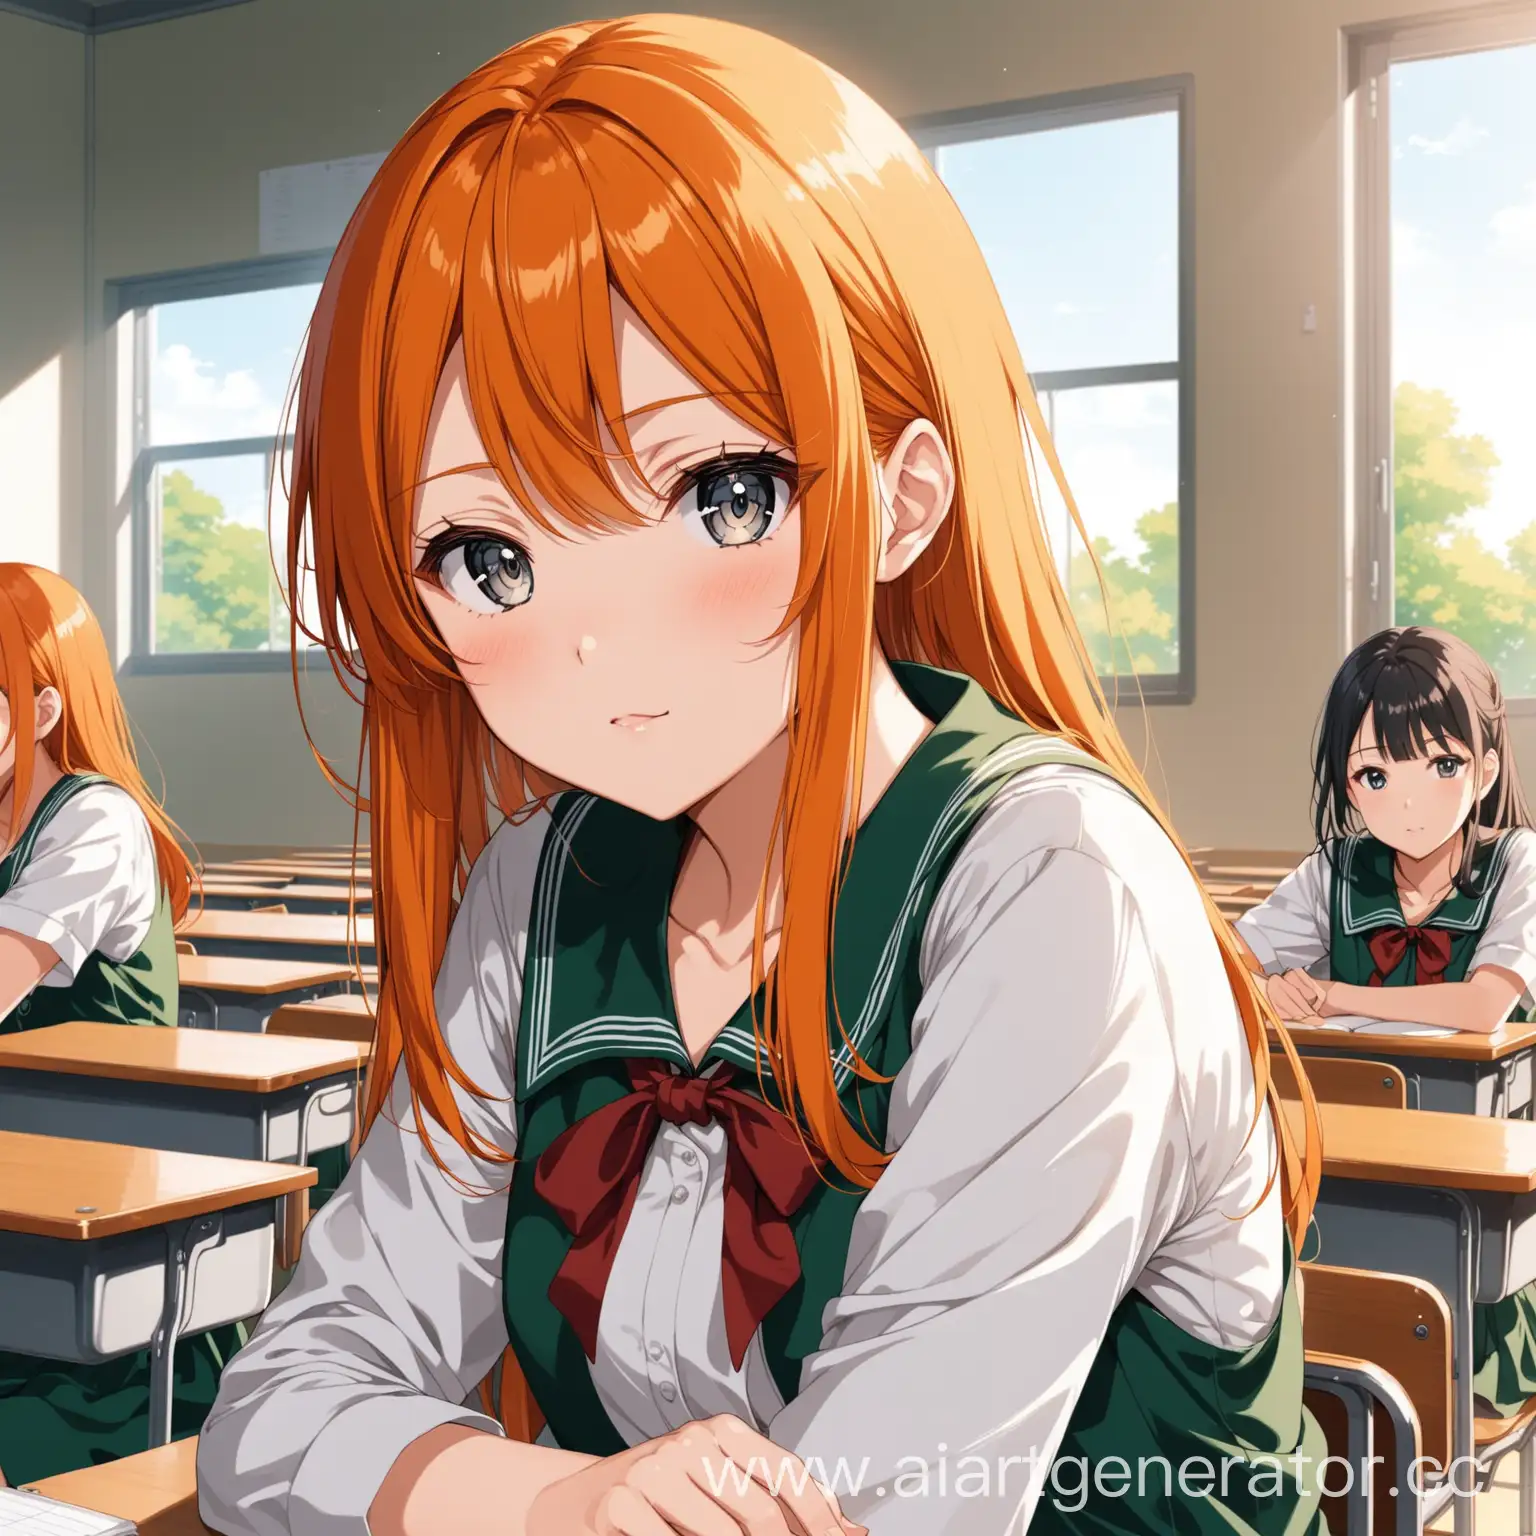 Anime-Girl-with-Orange-Hair-in-Classroom-Setting